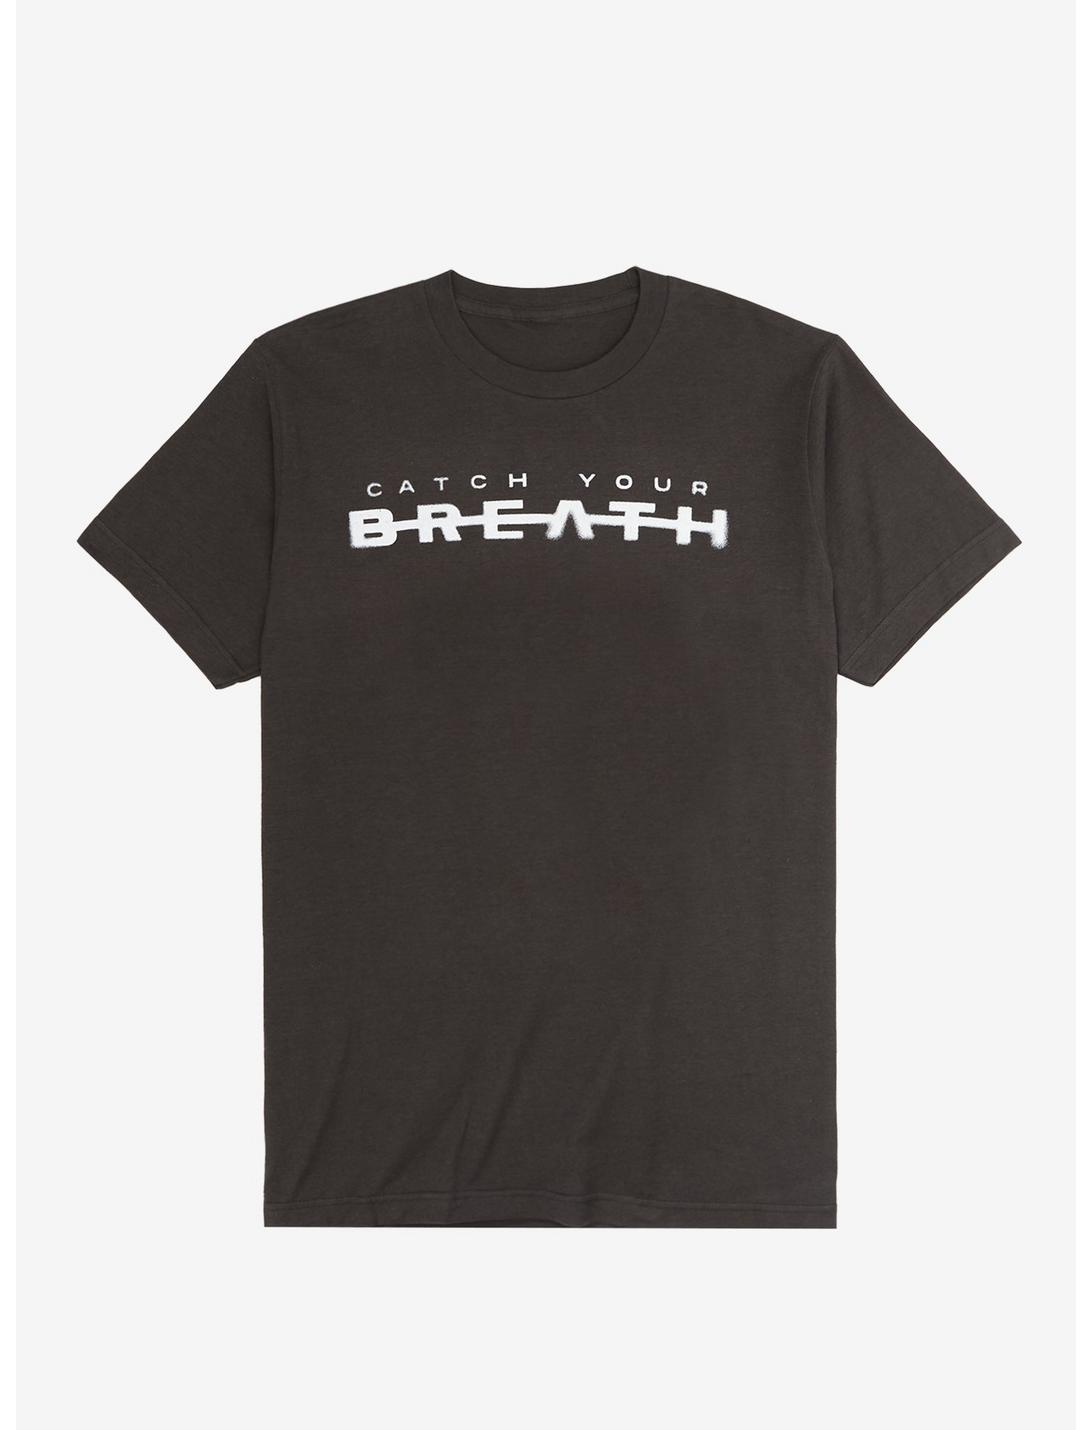 Catch Your Breath Dial Tone Lyrics T-Shirt, CHARCOAL, hi-res